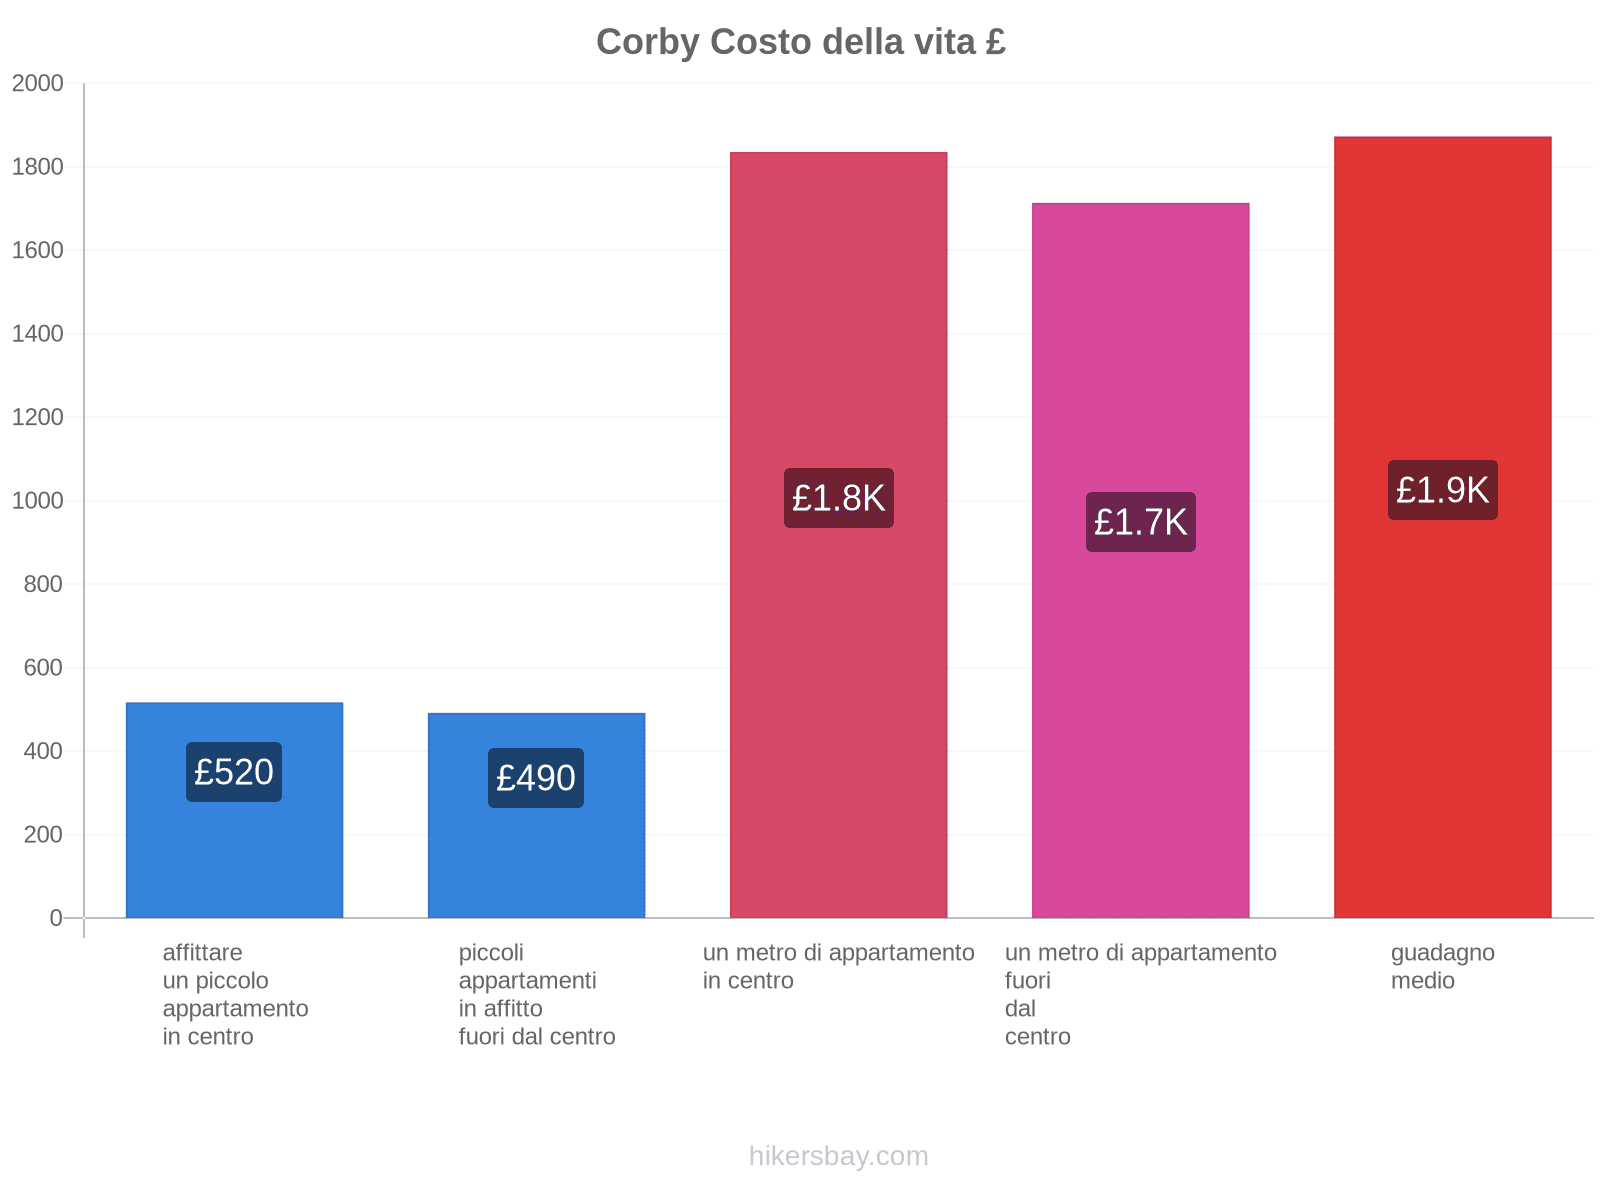 Corby costo della vita hikersbay.com